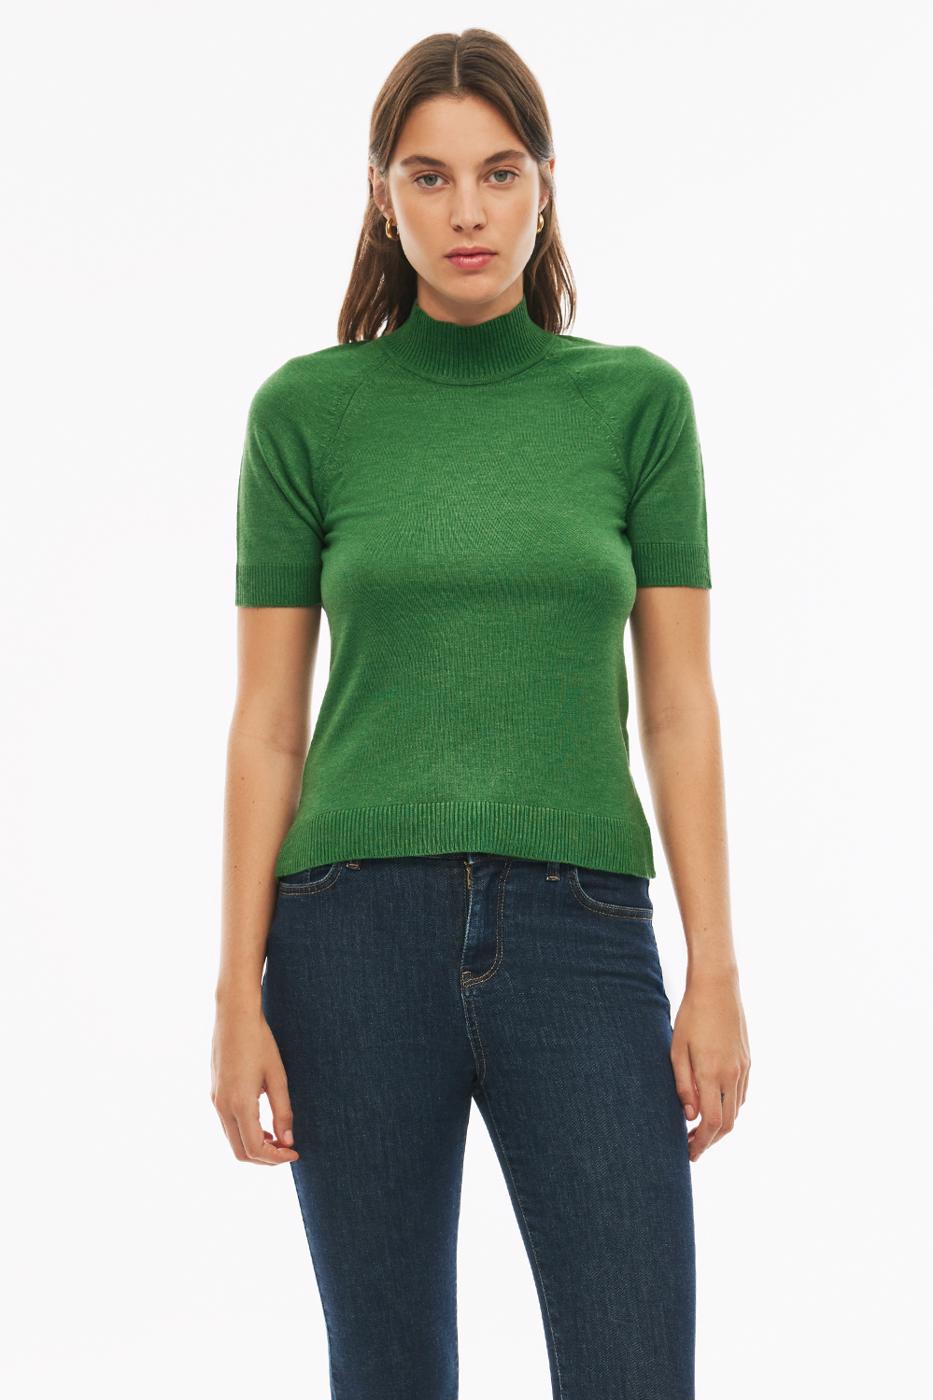 Bayan ZÜMRÜT YEŞİLİ İllas Regular Fit Standart Boy Yüksek Boğaz Detaylı Zümrüt Yeşili Renk Kadın Triko Bluz 